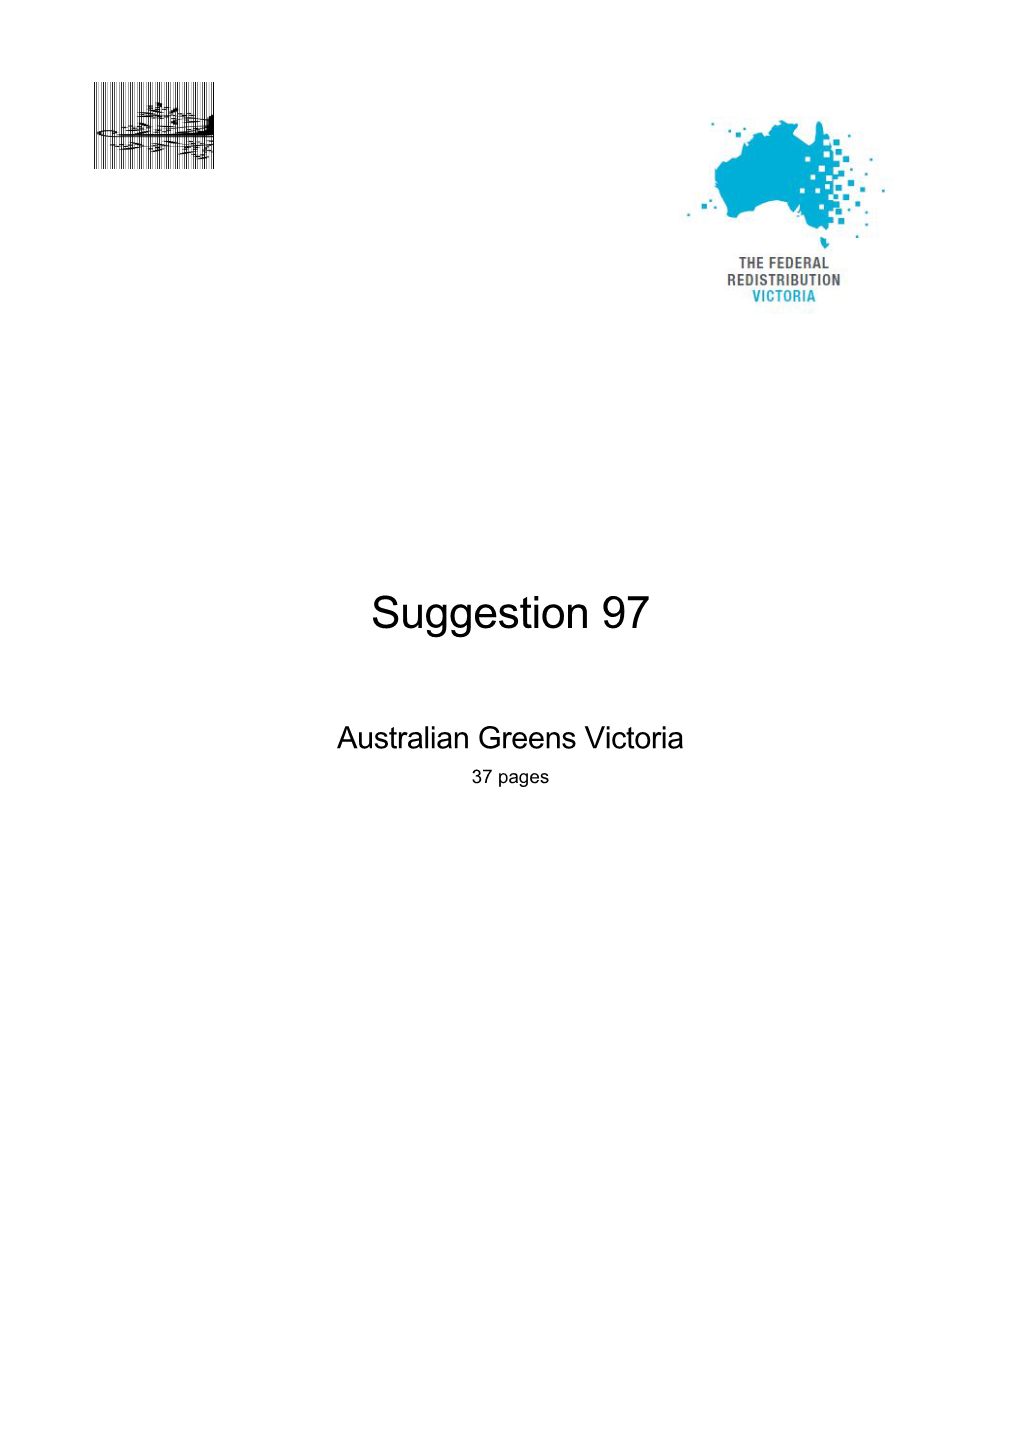 Australian Greens Victoria 37 Pages AUSTRALIAN GREENS VICTORIA SUBMISSION to the VICTORIAN REDISTRIBUTION